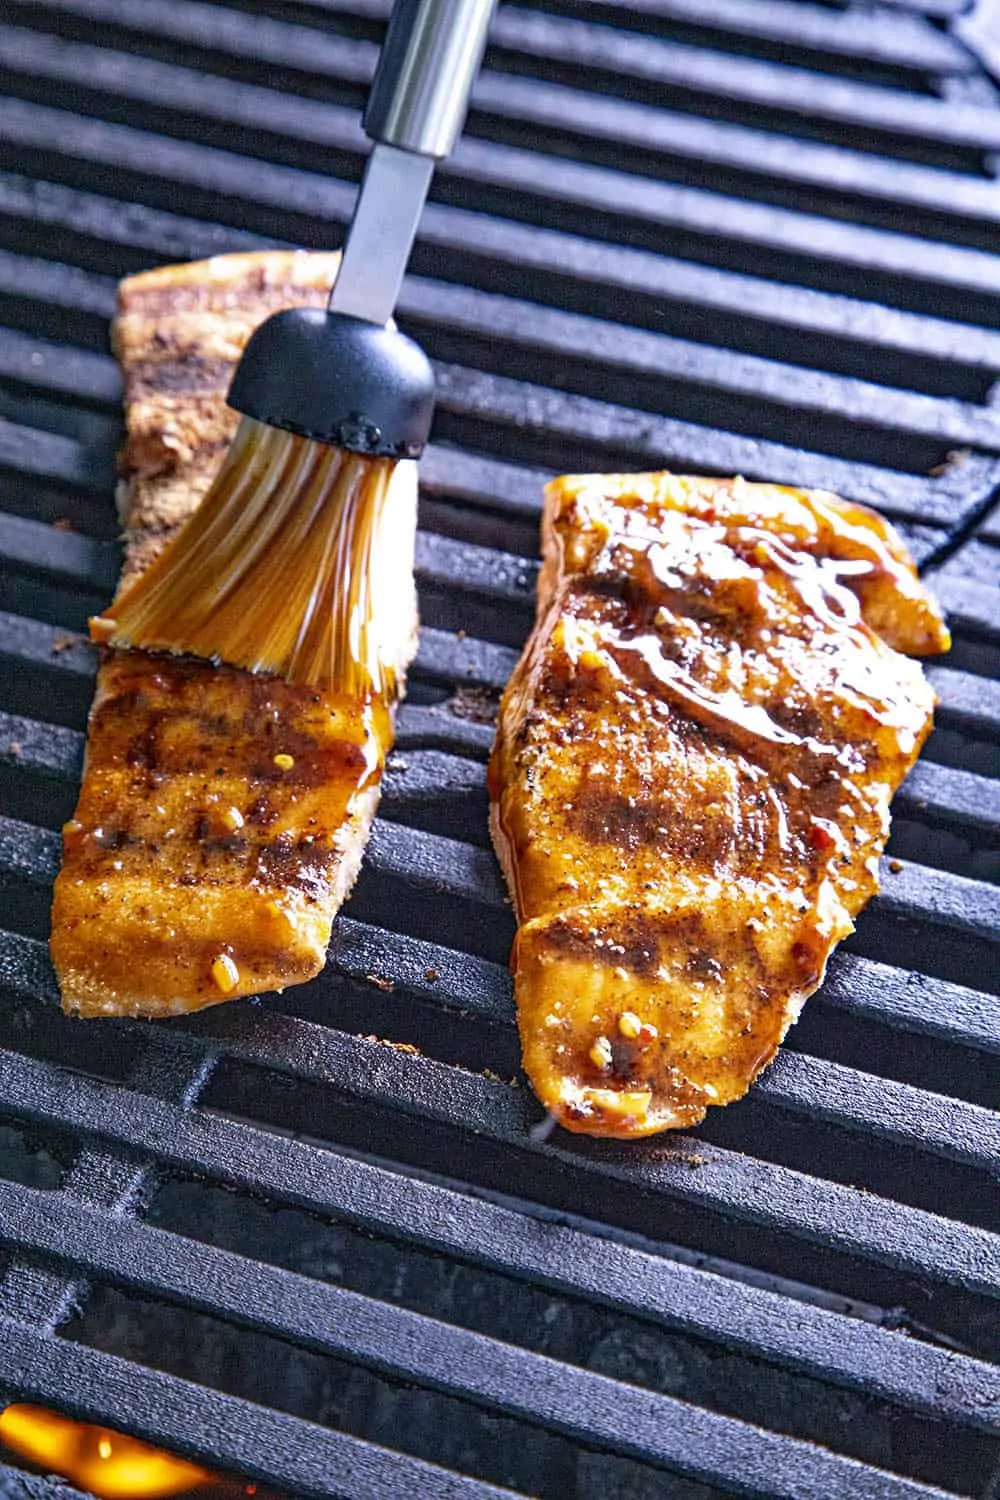 Brushing teriyaki sauce onto salmon on the grill